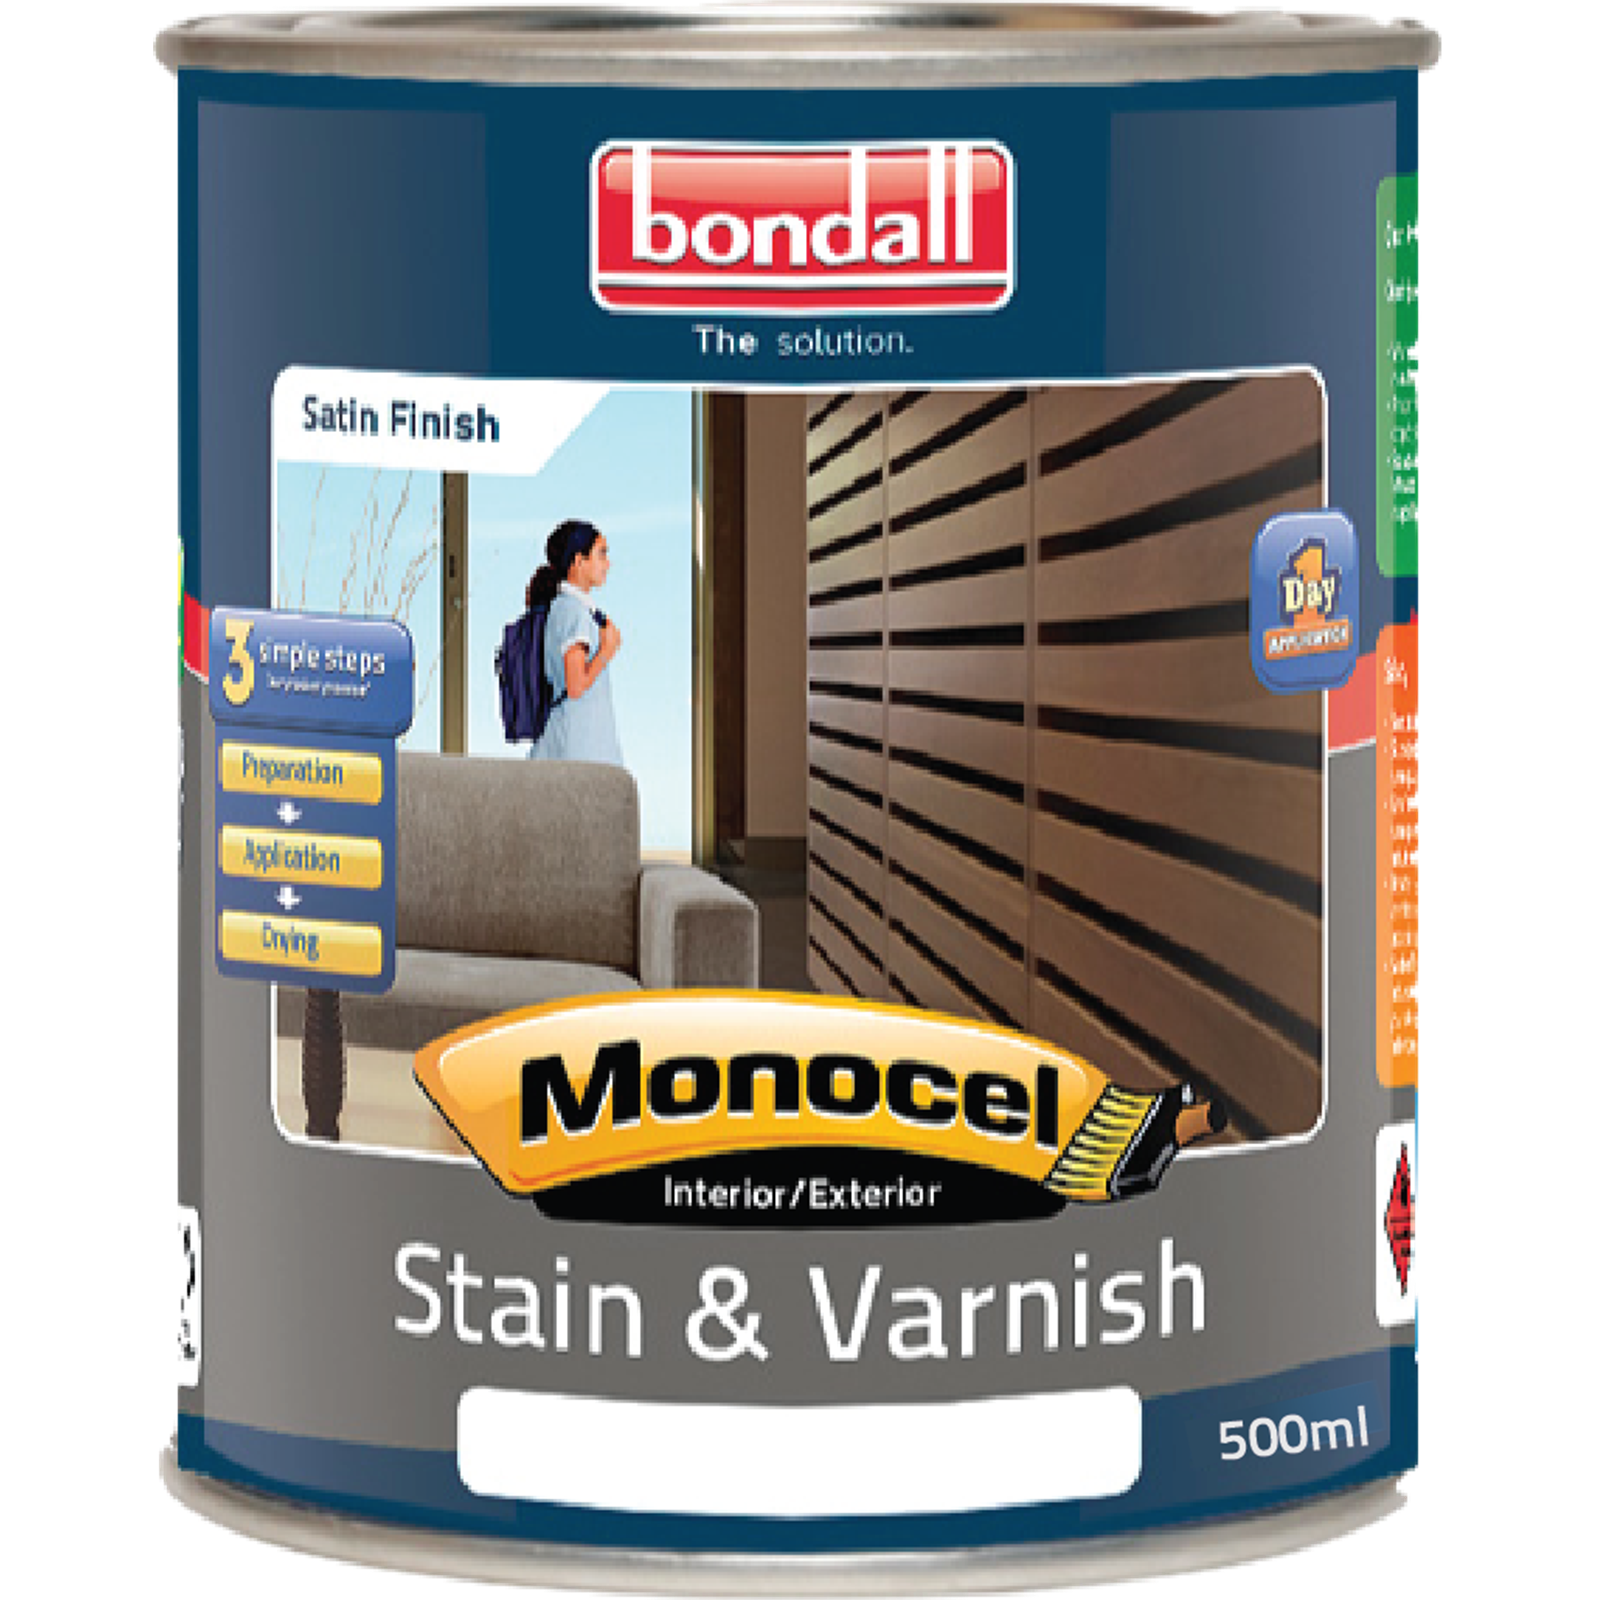 Bondall 500ml Cedar Monocel Stain And Varnish